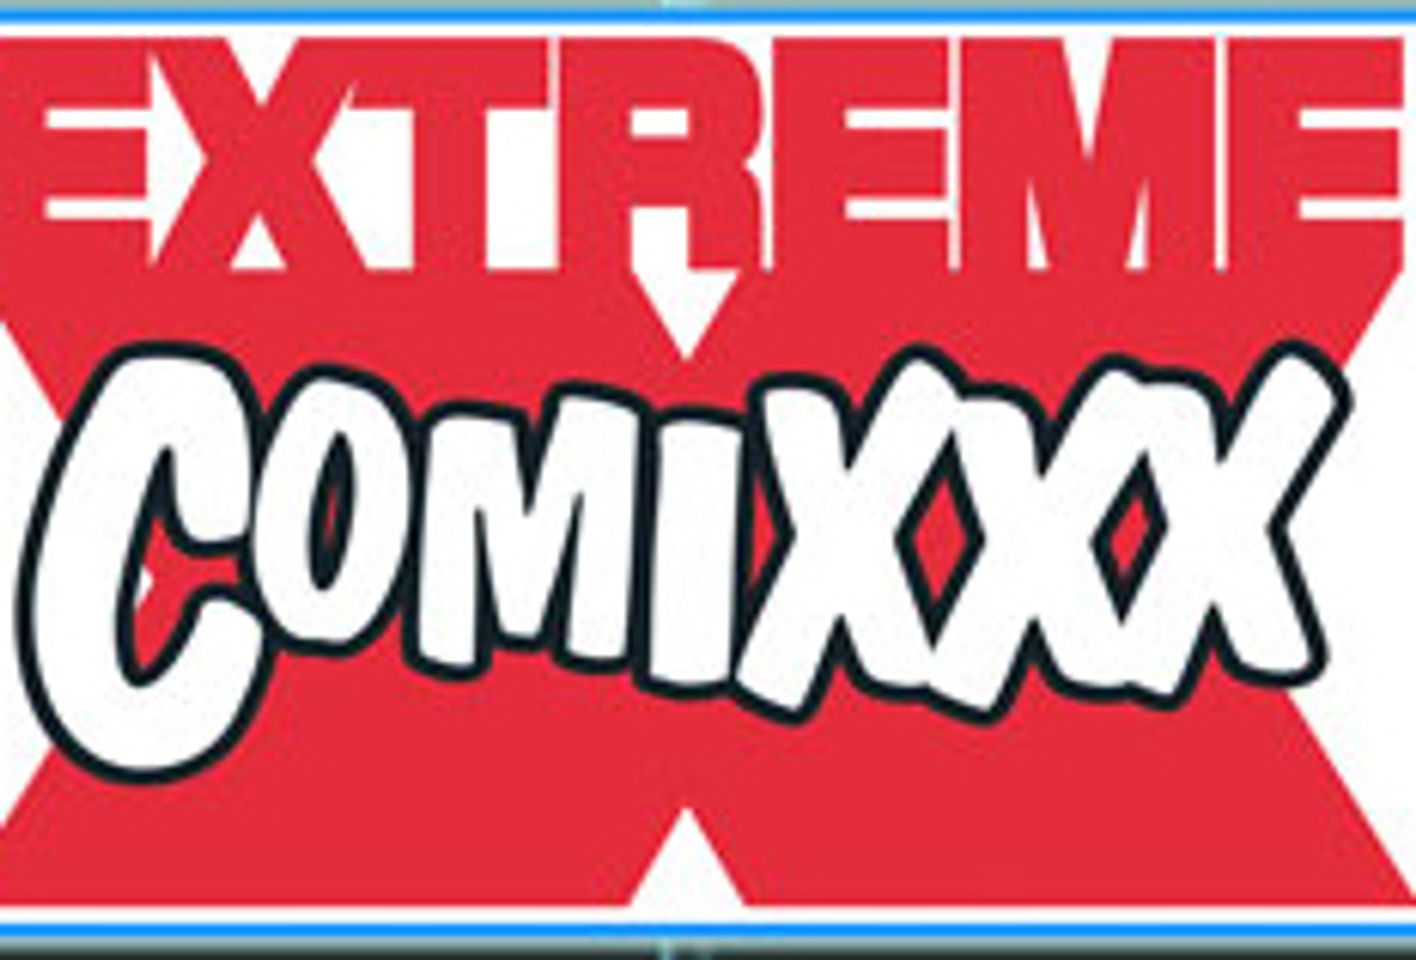 Extreme Comixxx Exhibiting at Comic-Con Alongside Carnal Comics